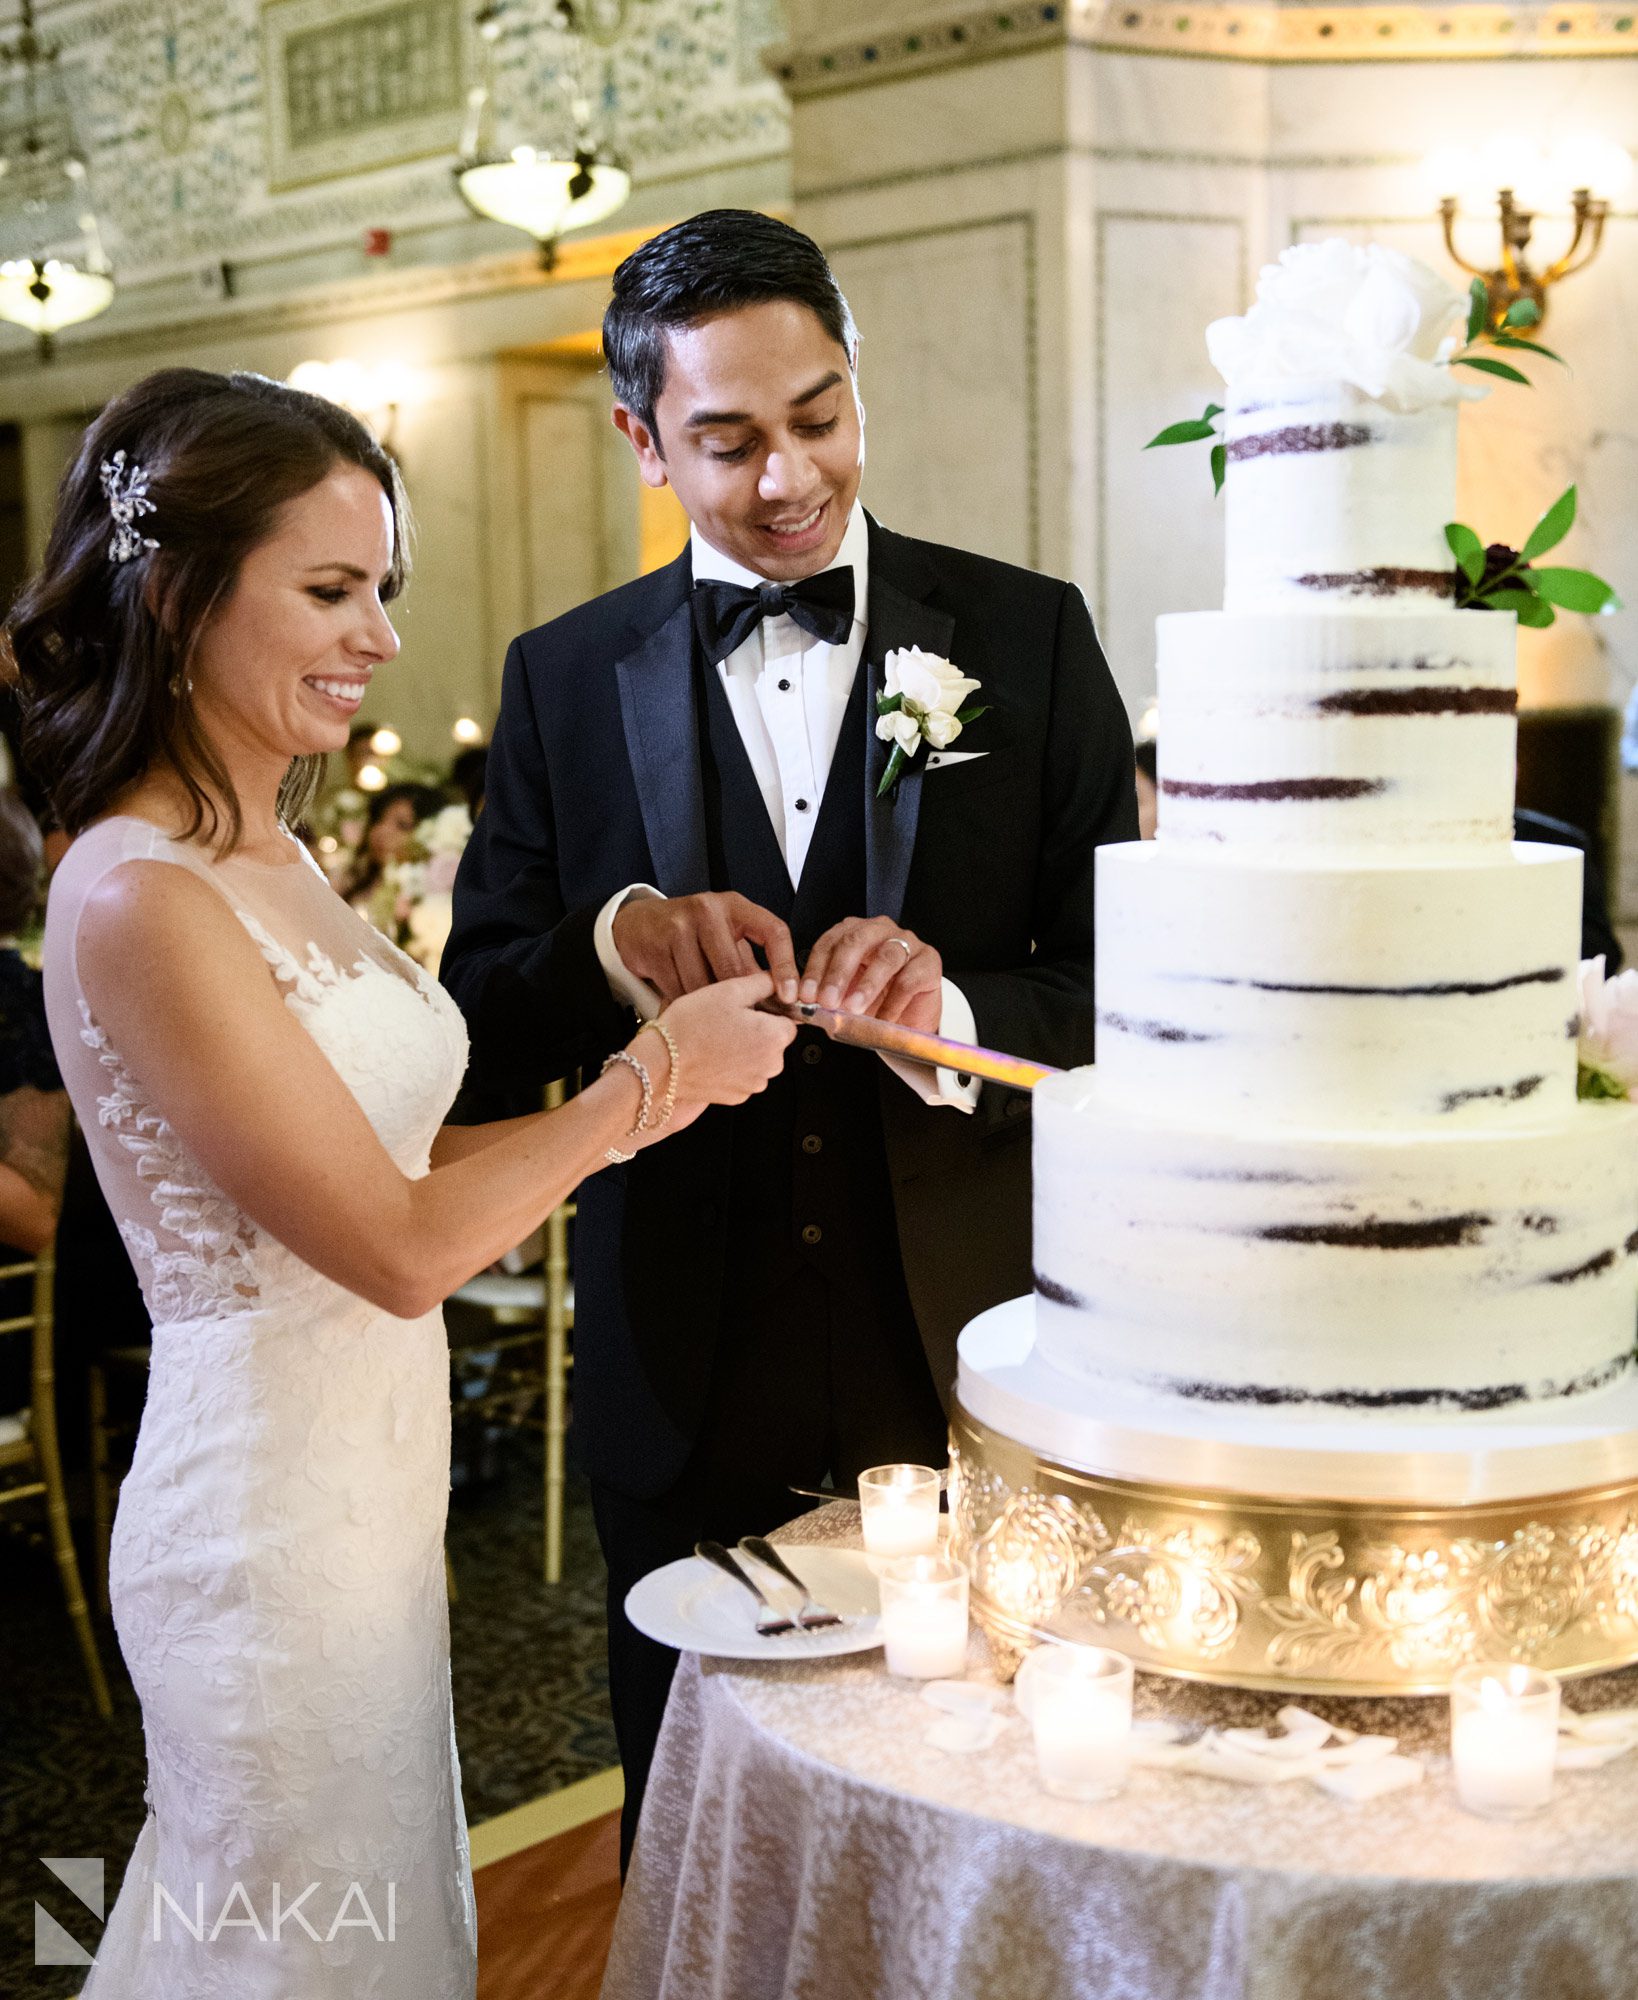 Chicago cultural wedding photos reception cake cutting